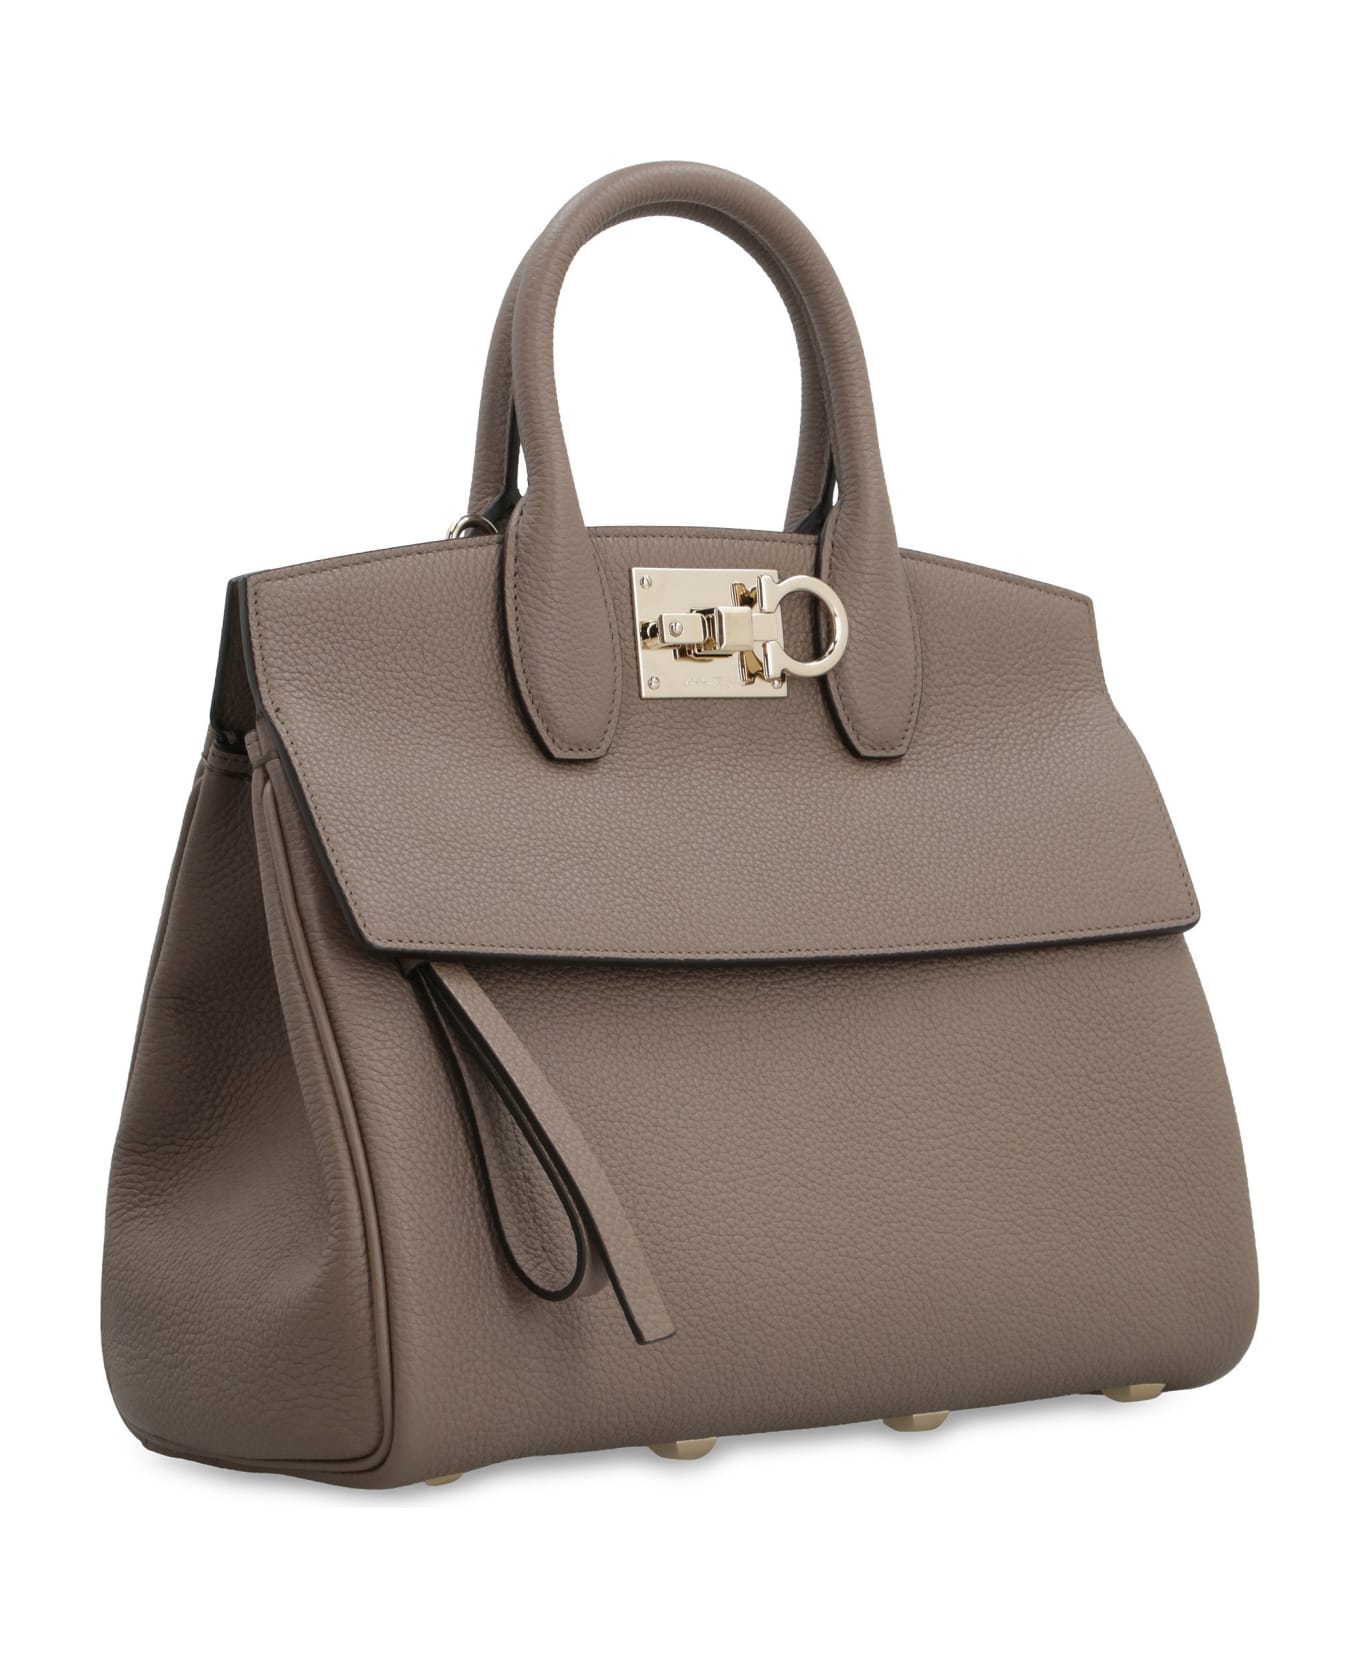 Ferragamo Studio Leather Handbag - Brown